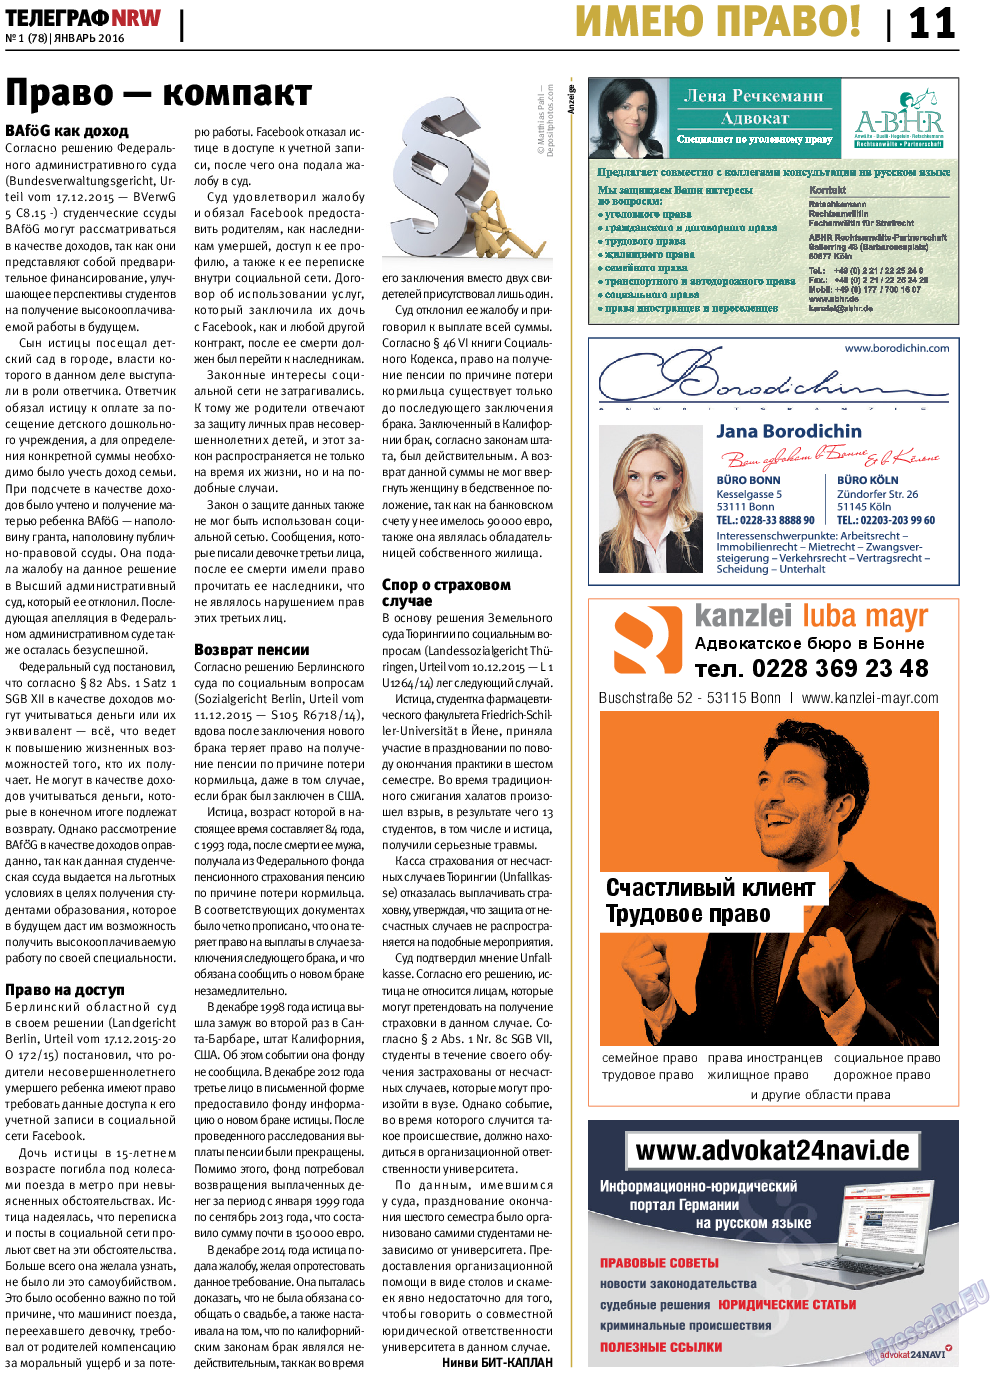 Телеграф NRW, газета. 2016 №1 стр.11